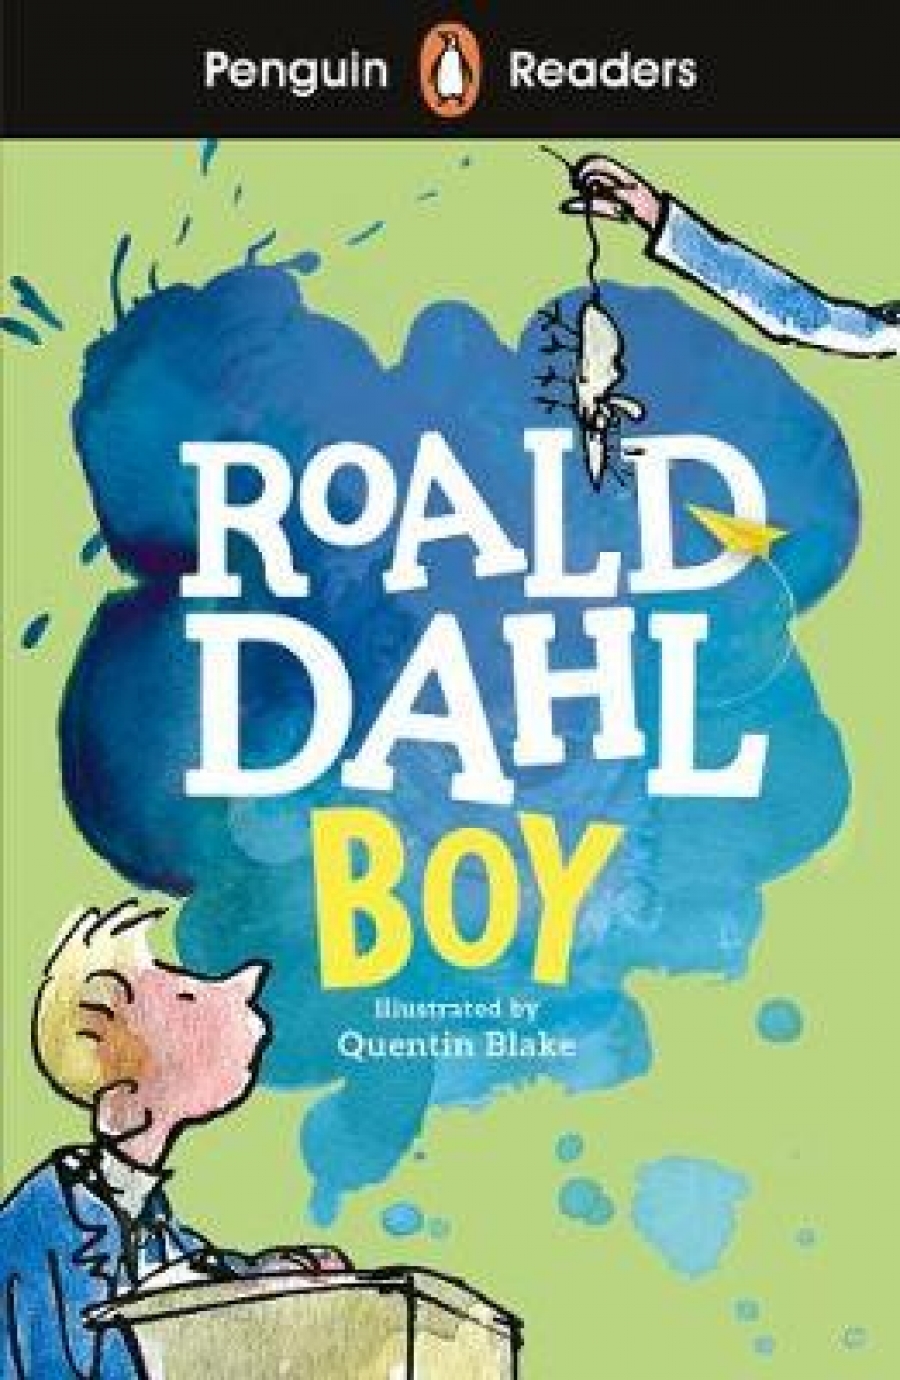 Dahl Roald Penguin Reader Level 2: Boy 